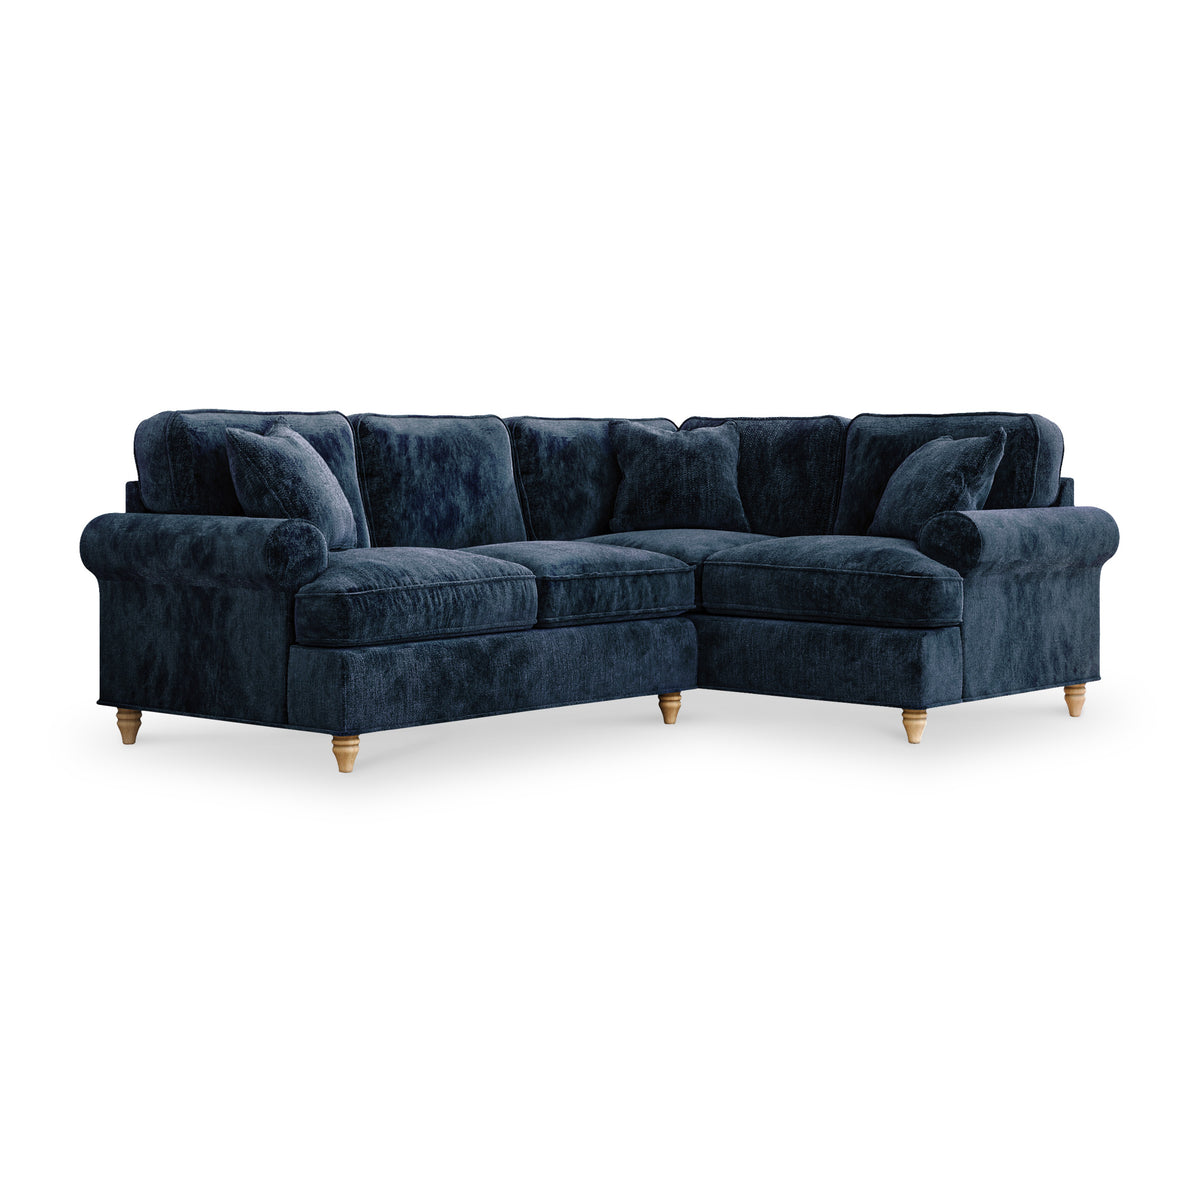 Alfie Navy Corner Sofa from Roseland Furniture